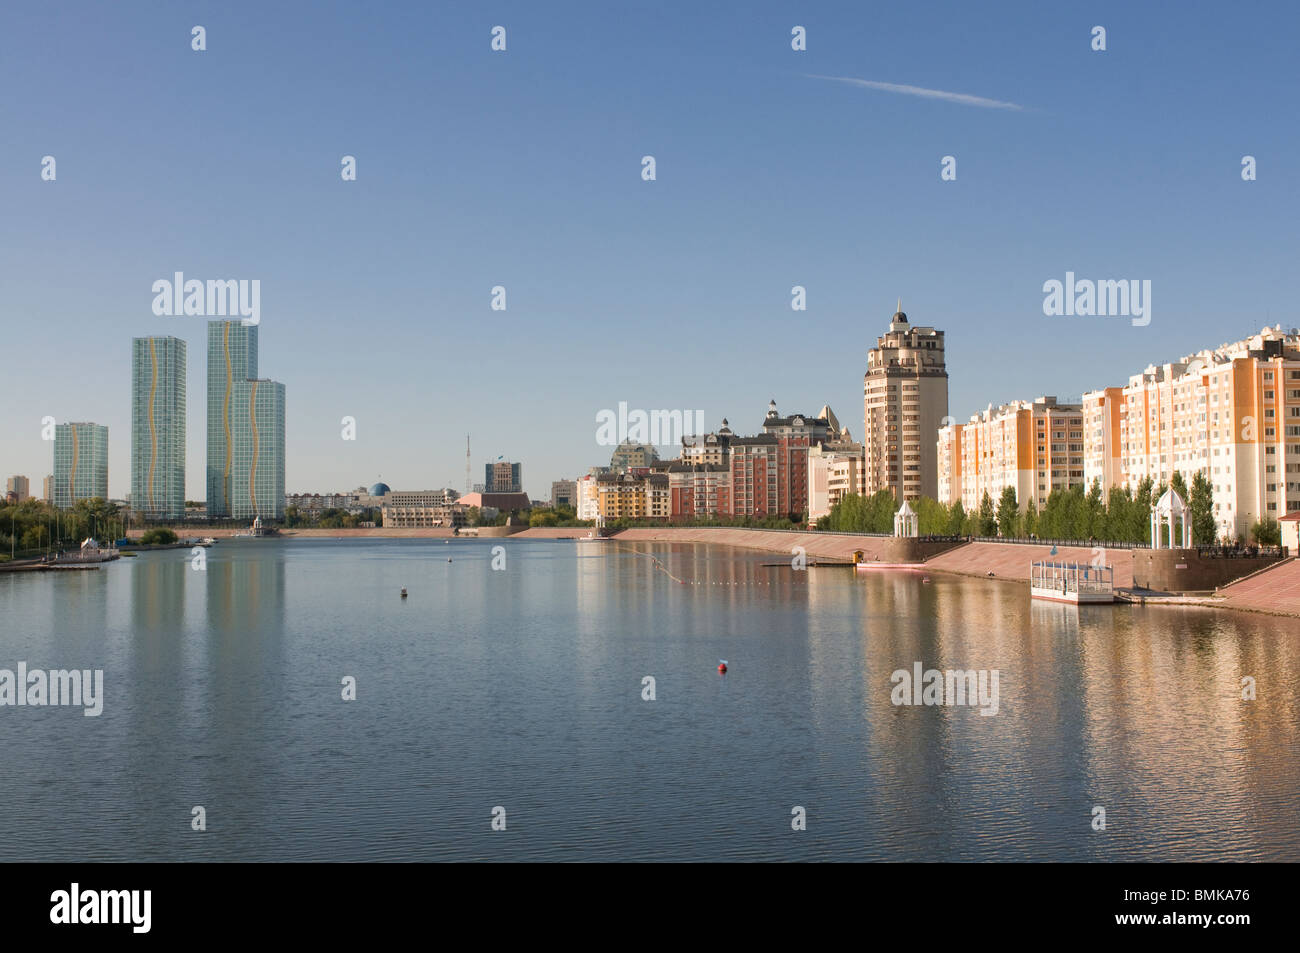 Skyline of Astana with skyscrapers, Kazakhstan Stock Photo